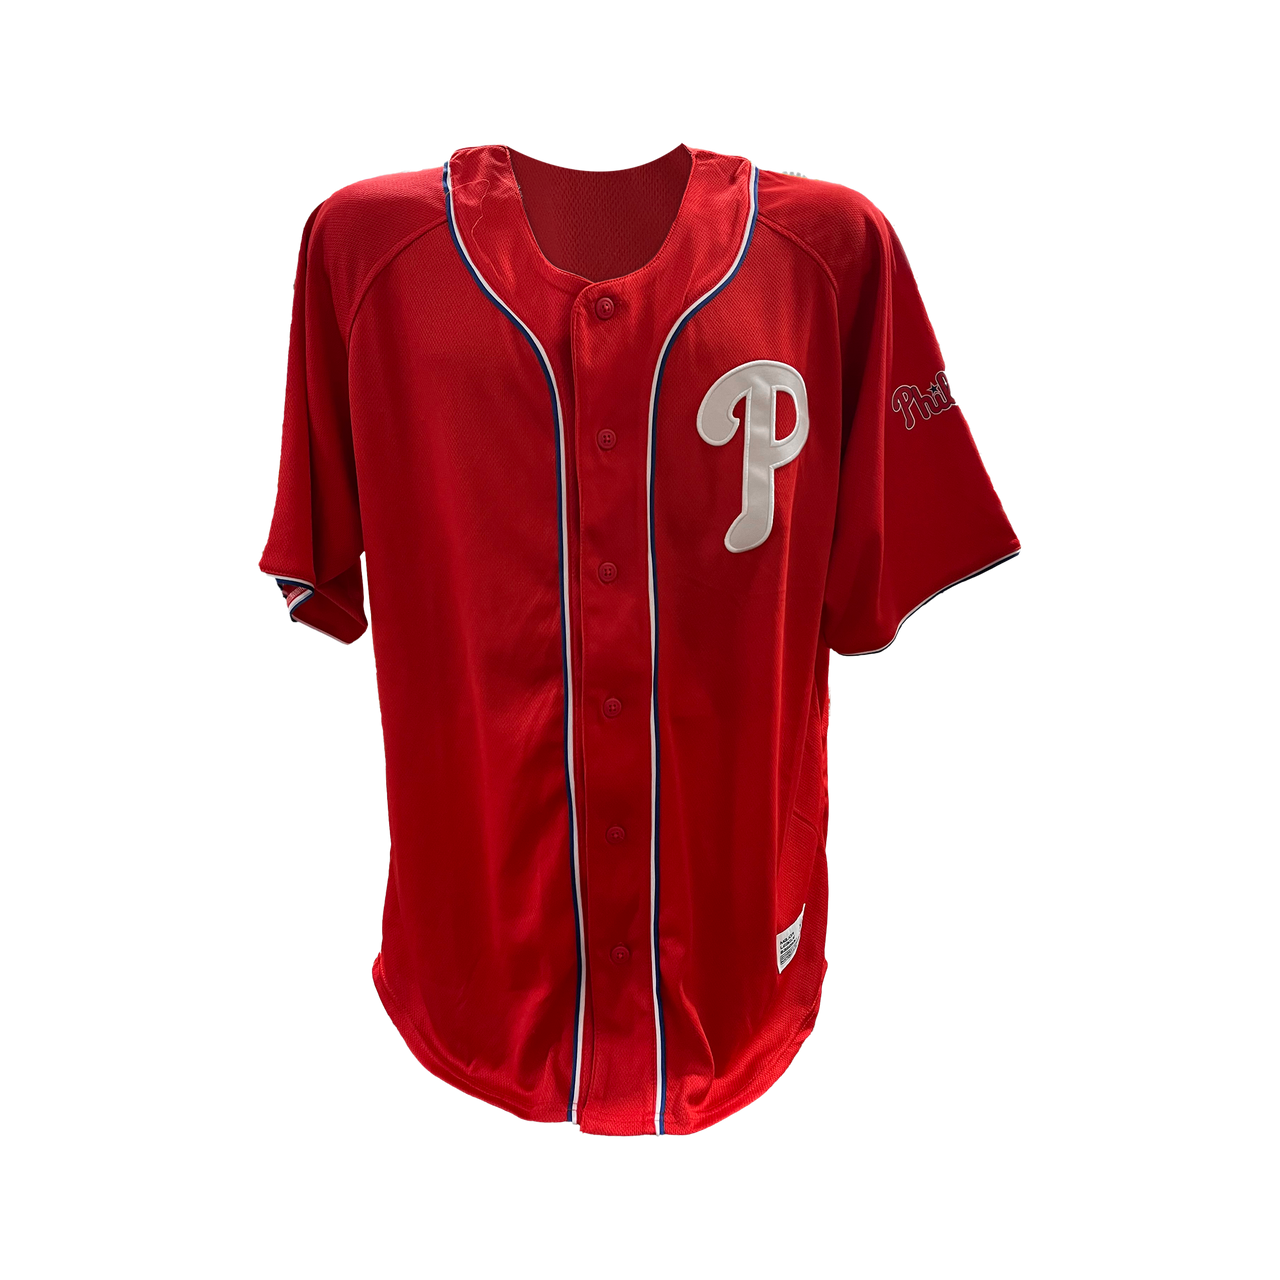 Unique MLB Baseball Team White Phillies Shirt - Wiseabe Apparels